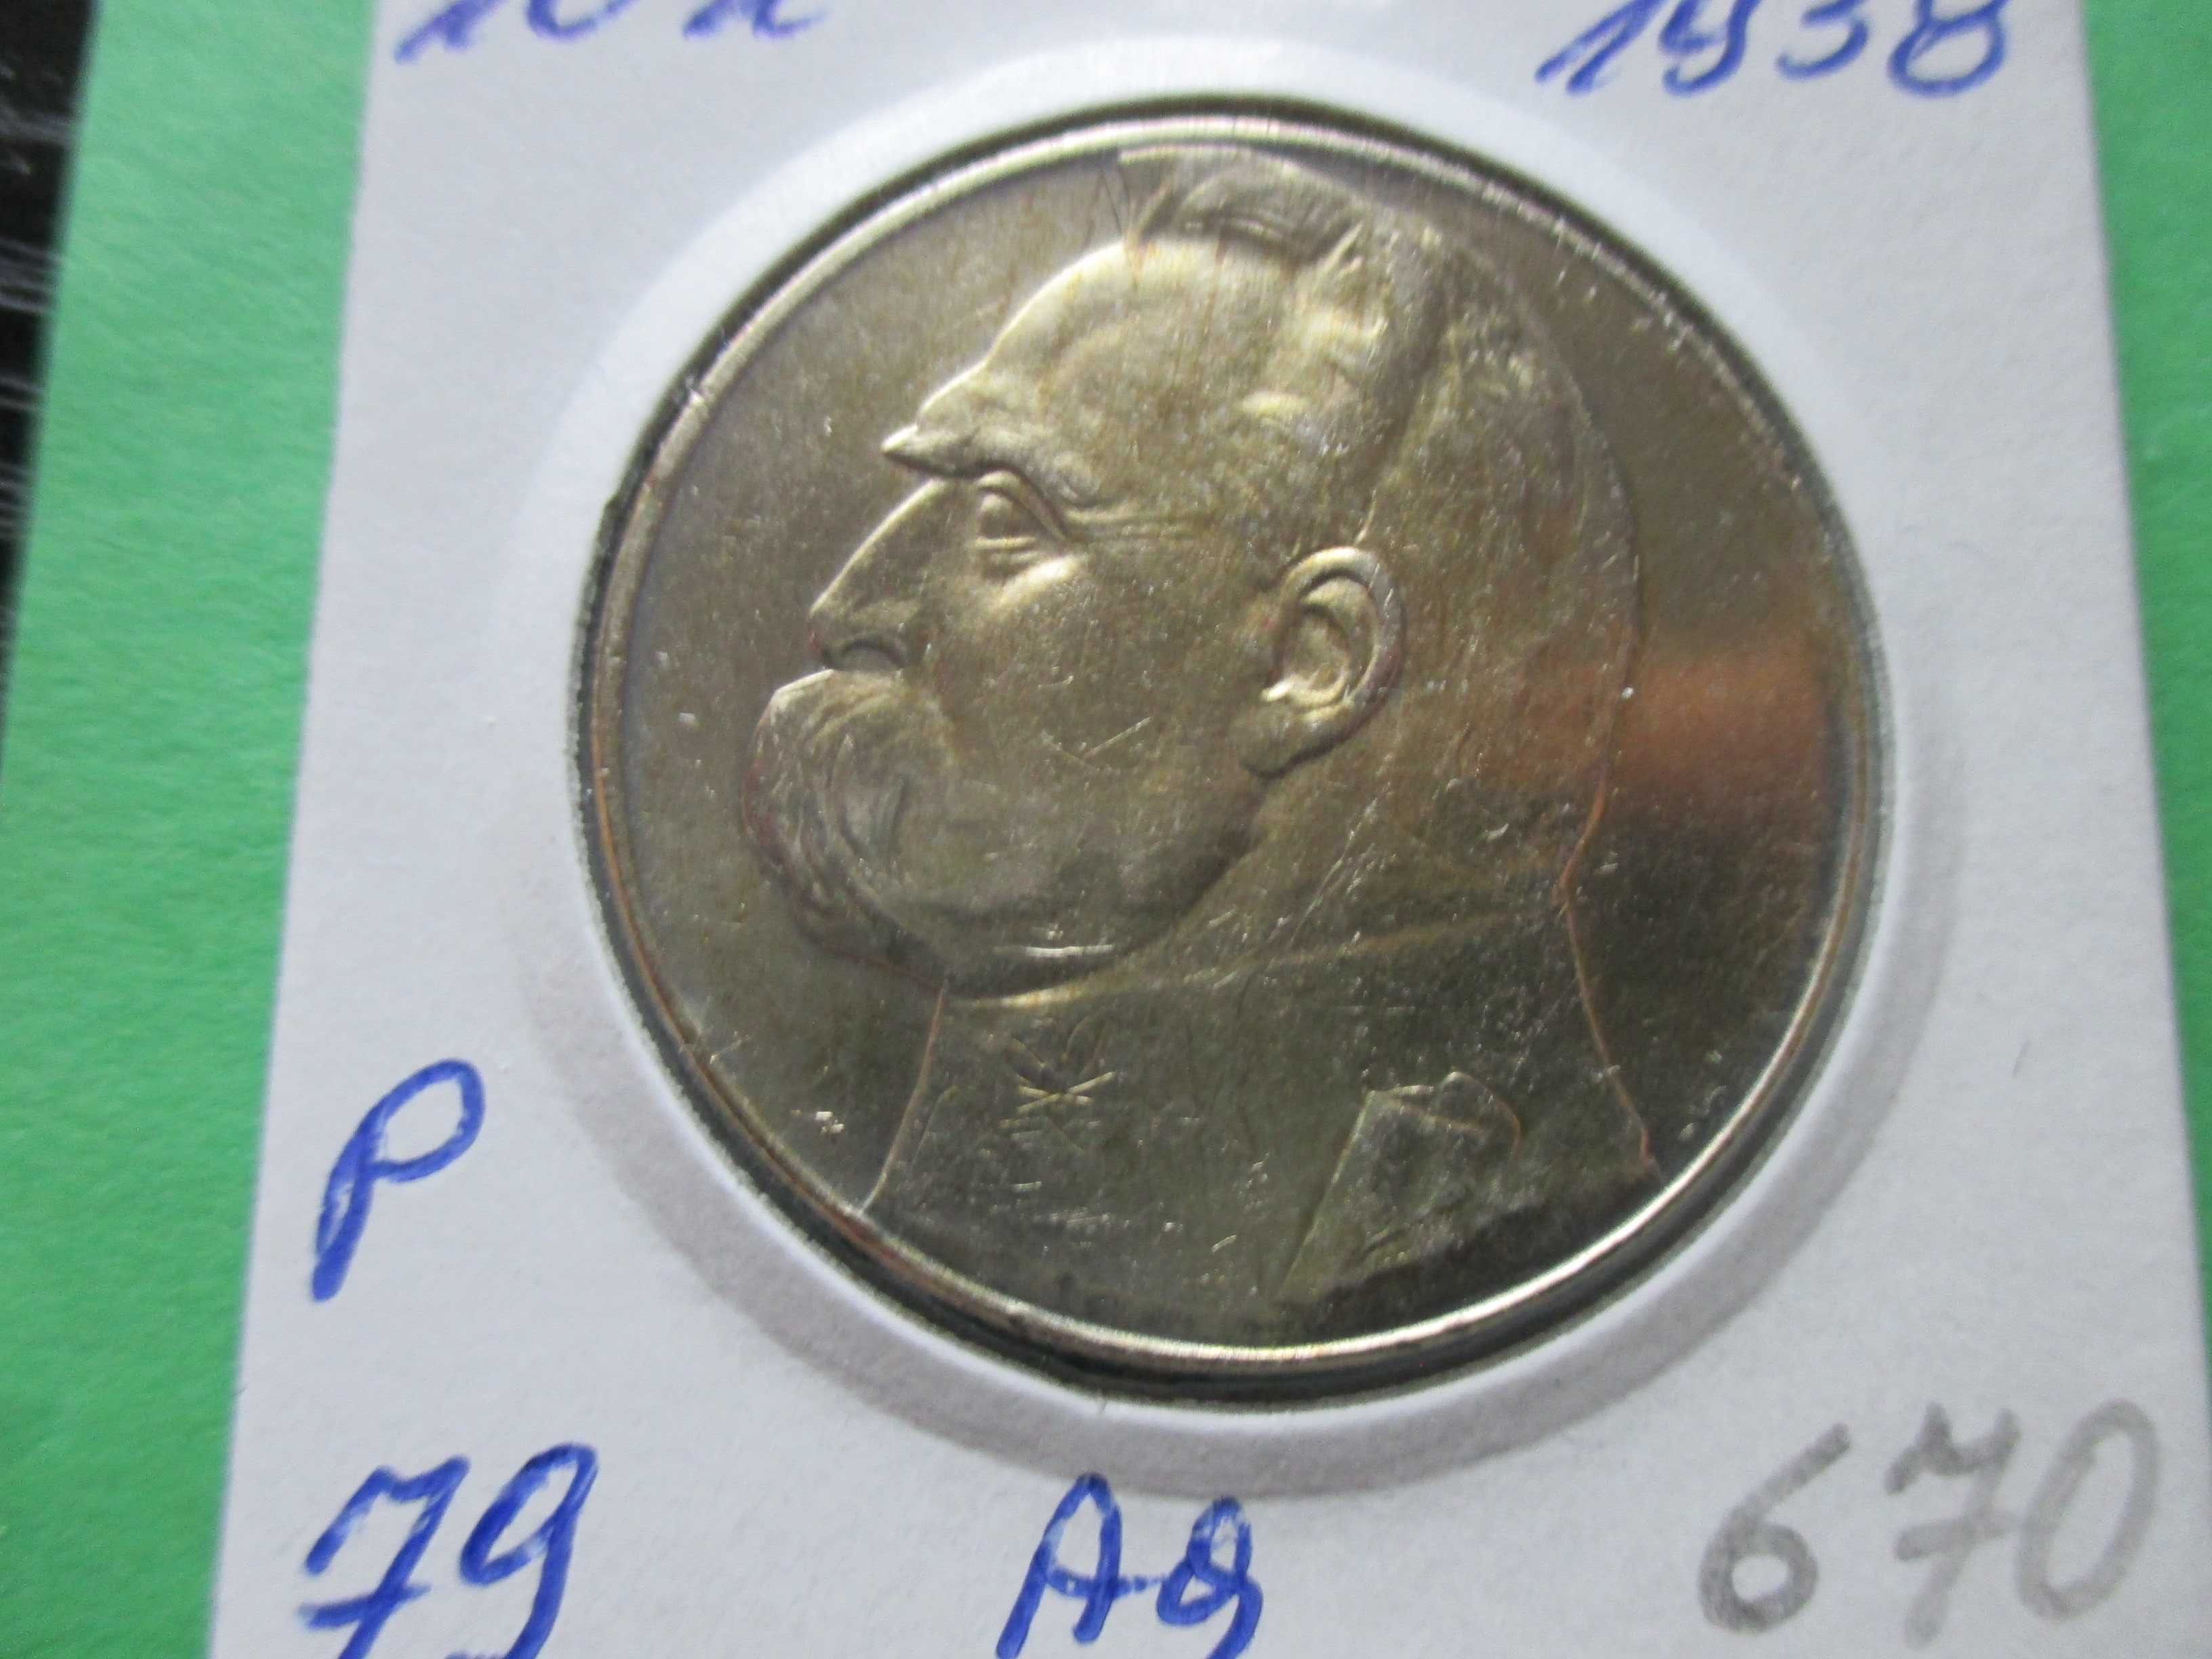 Srebrna moneta 10 zł z 1938 r. Marszałek. Oryginał !!!